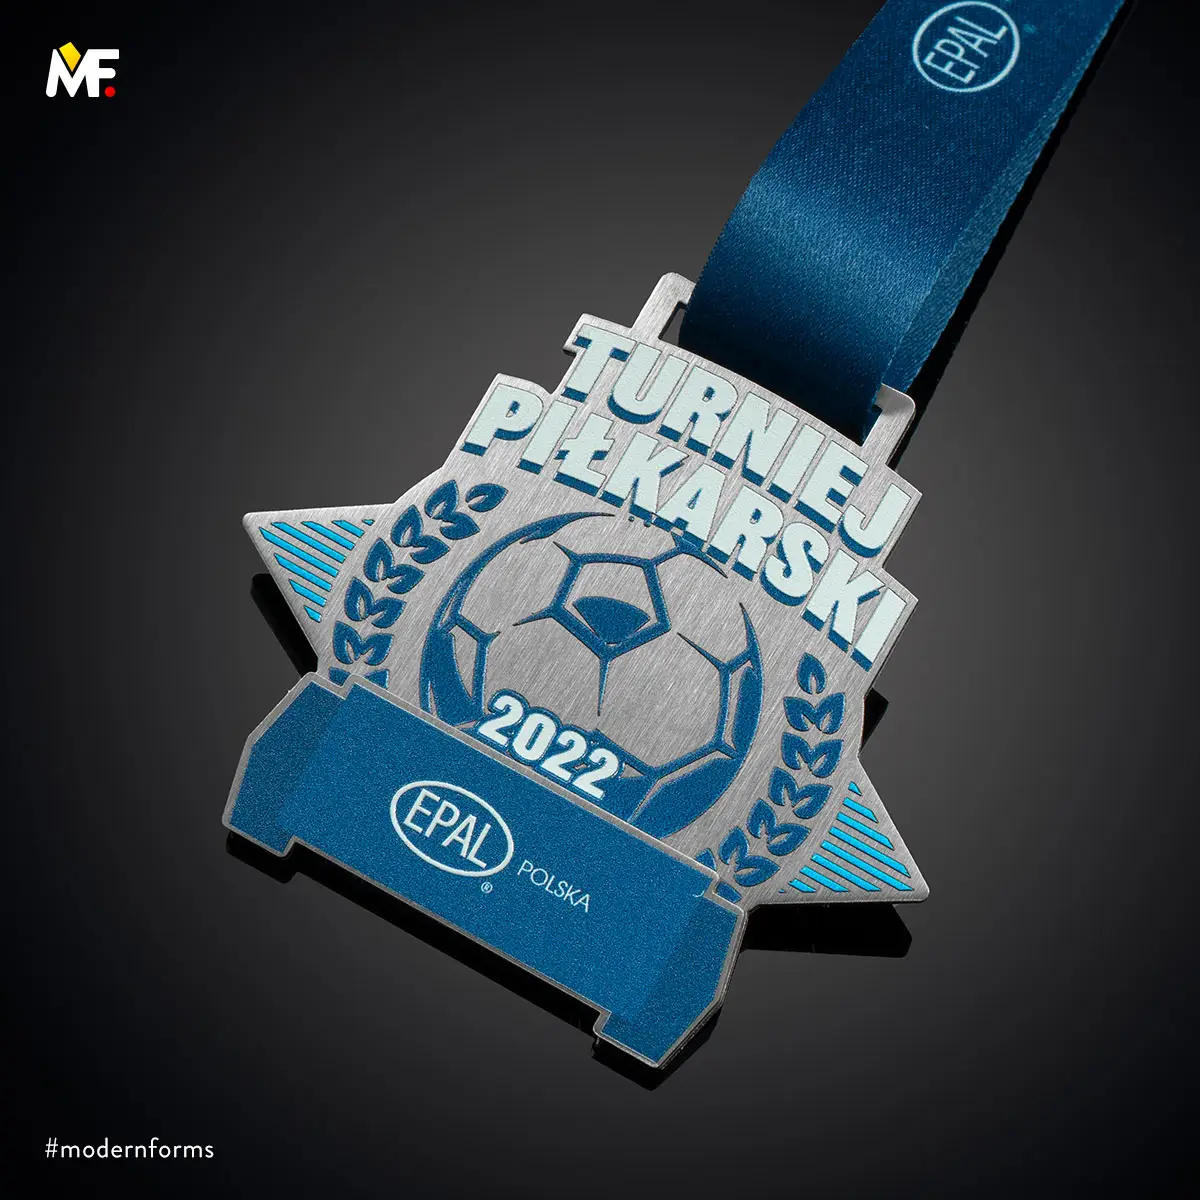 medale metalowe na turniej piłkarski